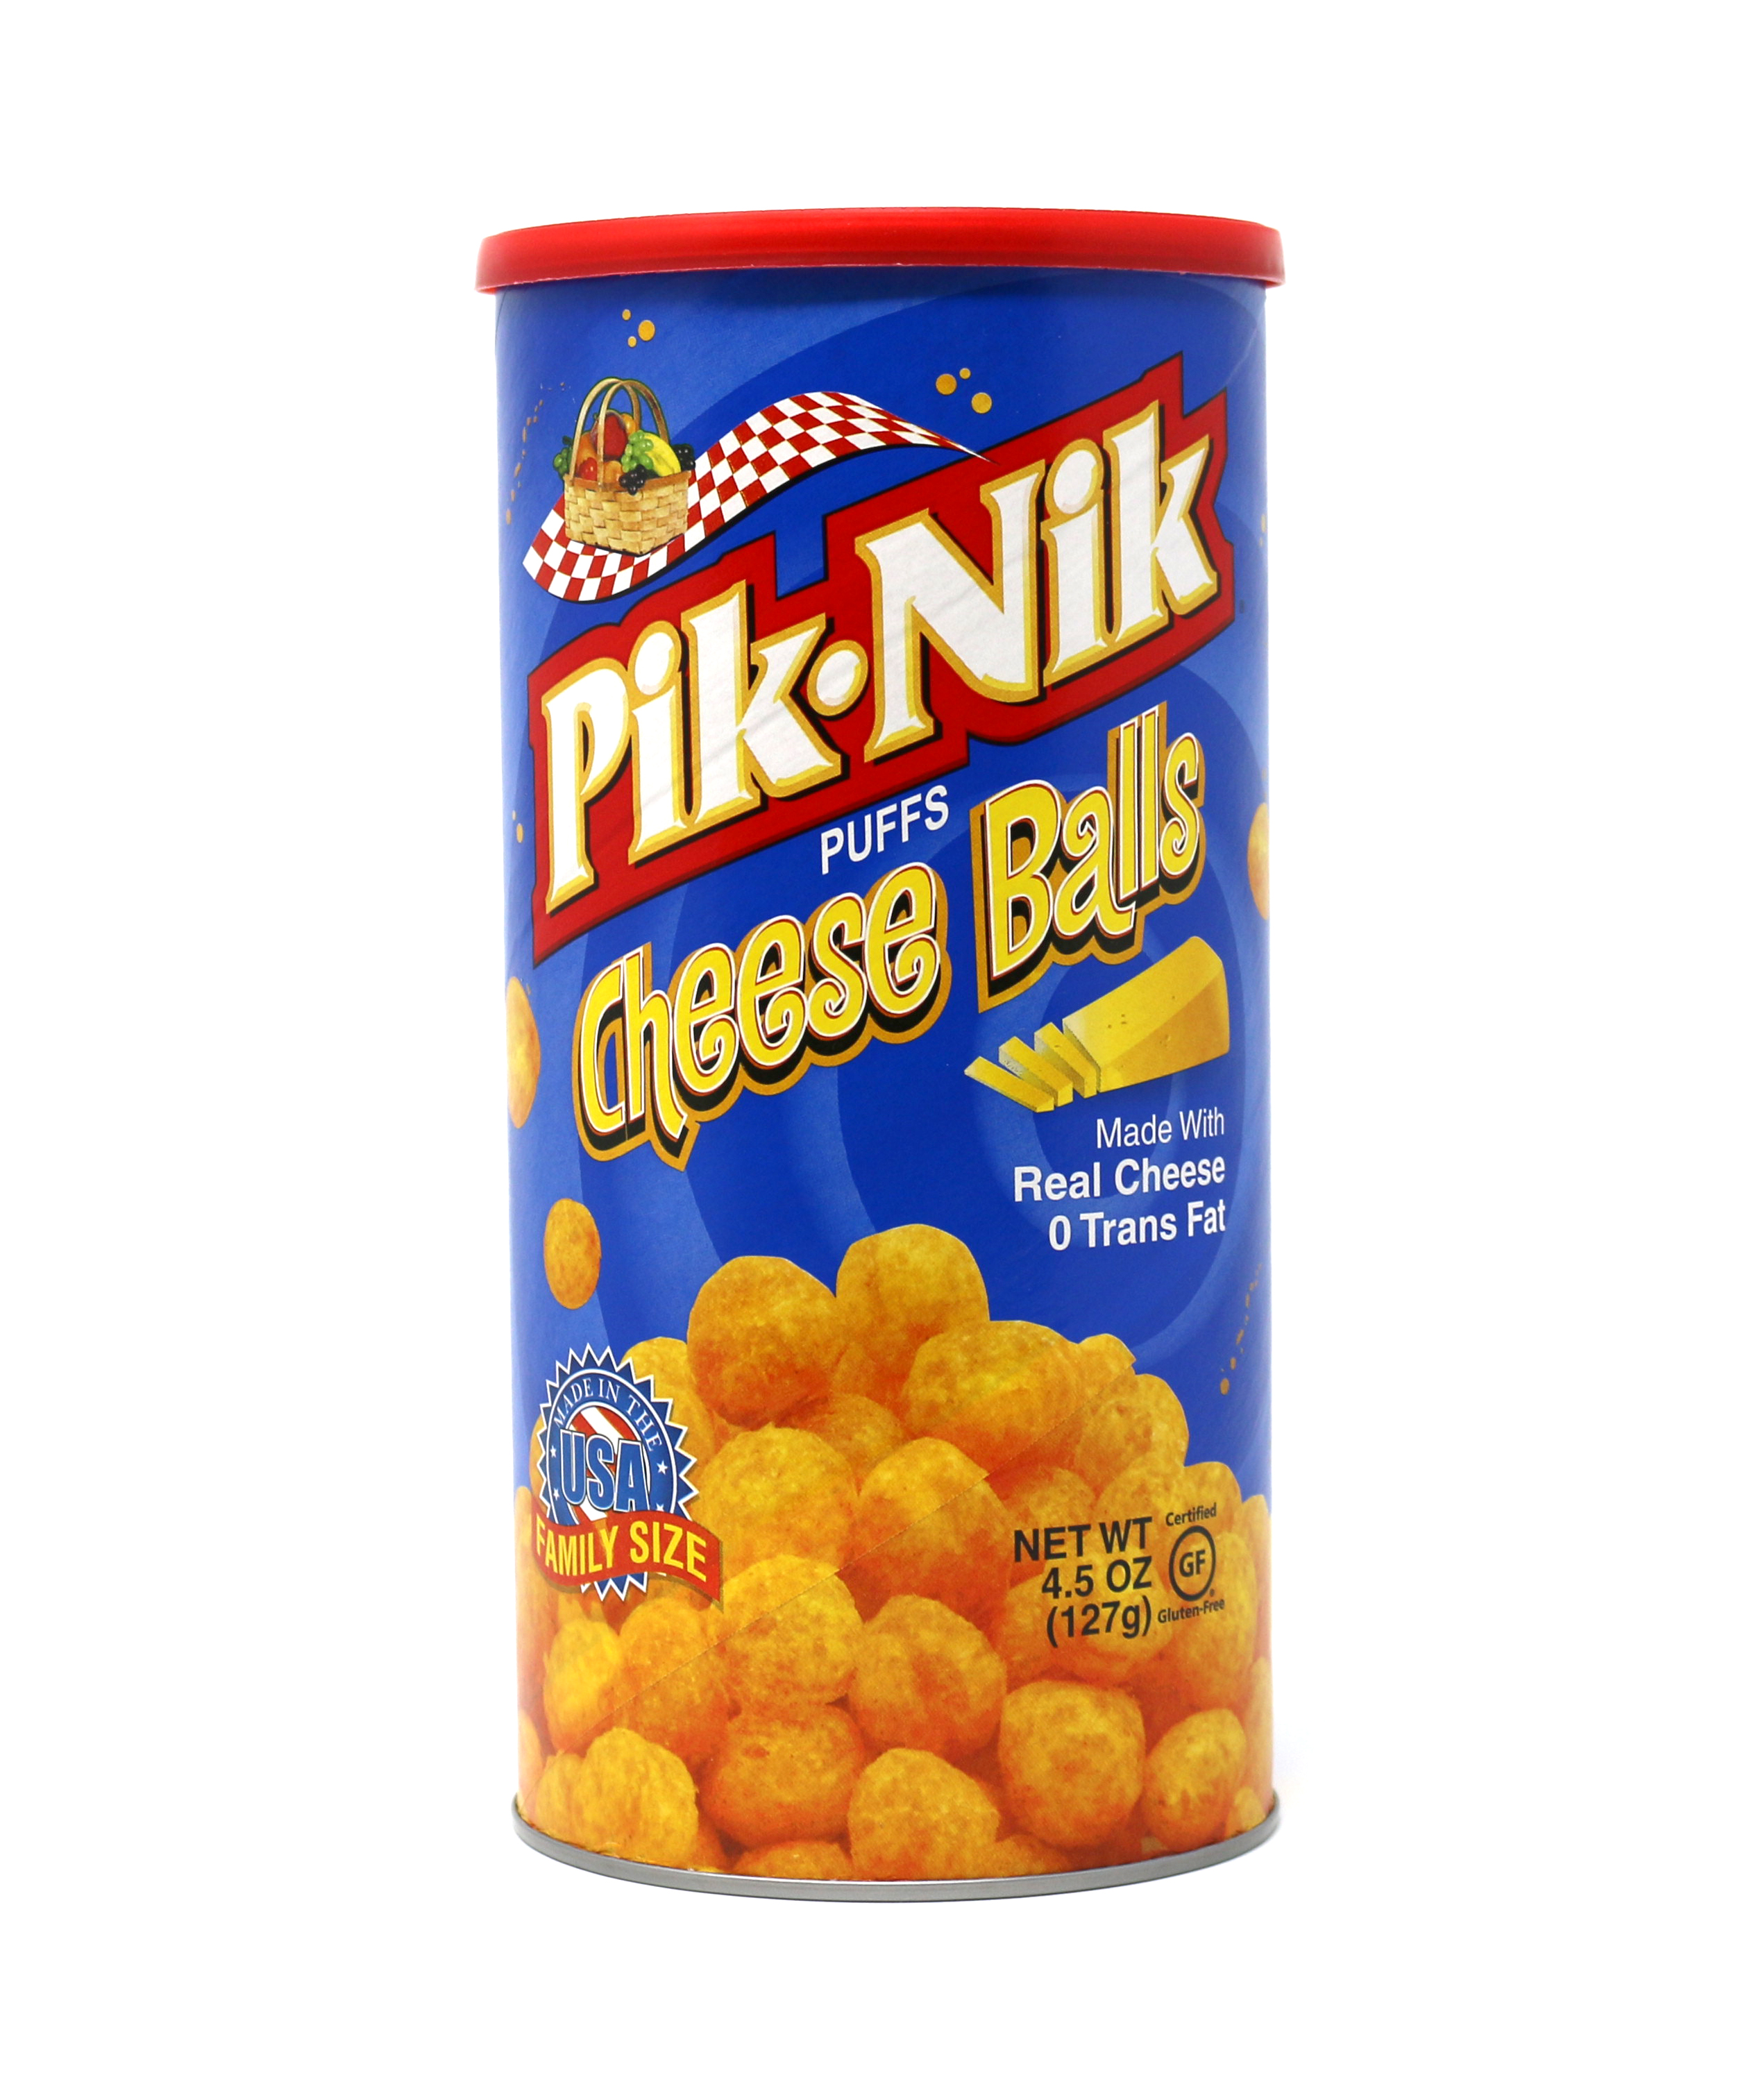 Pik Nik Cheese balls